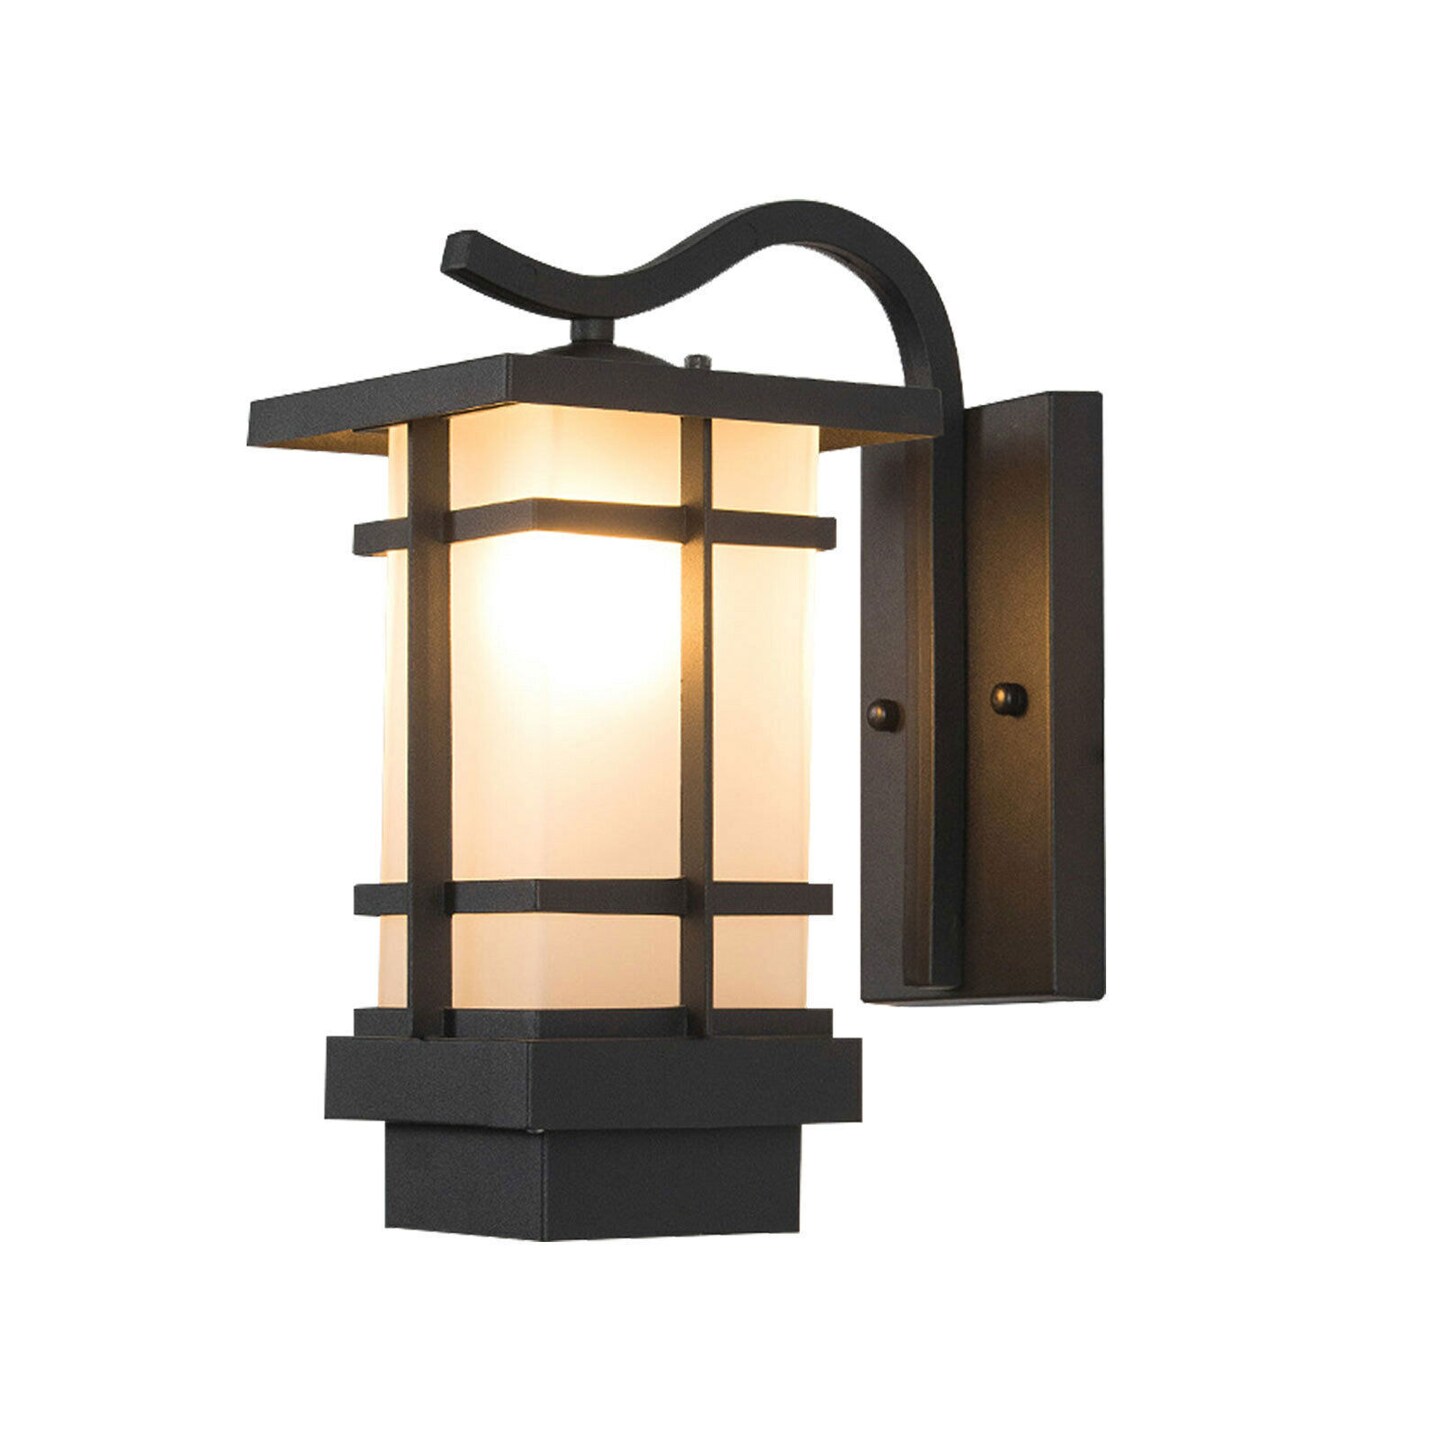 Kitcheniva Black Wall Lantern Dusk to Dawn Lamp Fixture